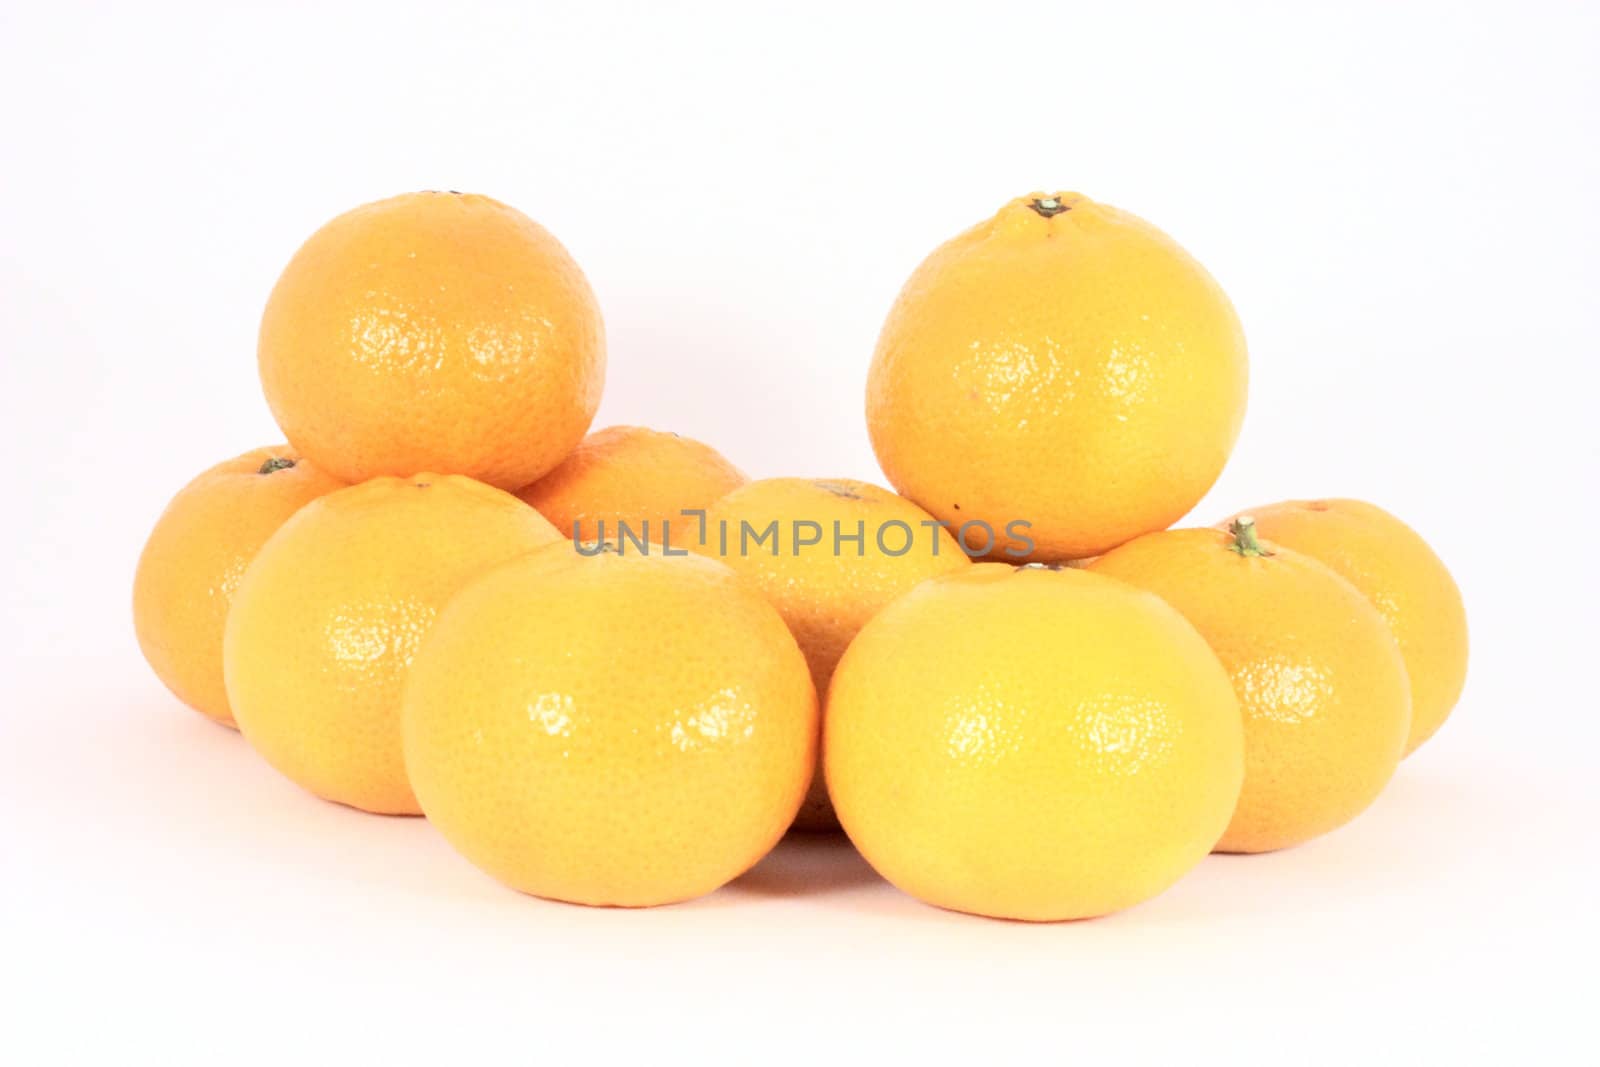 stack of mandarines isolated on white